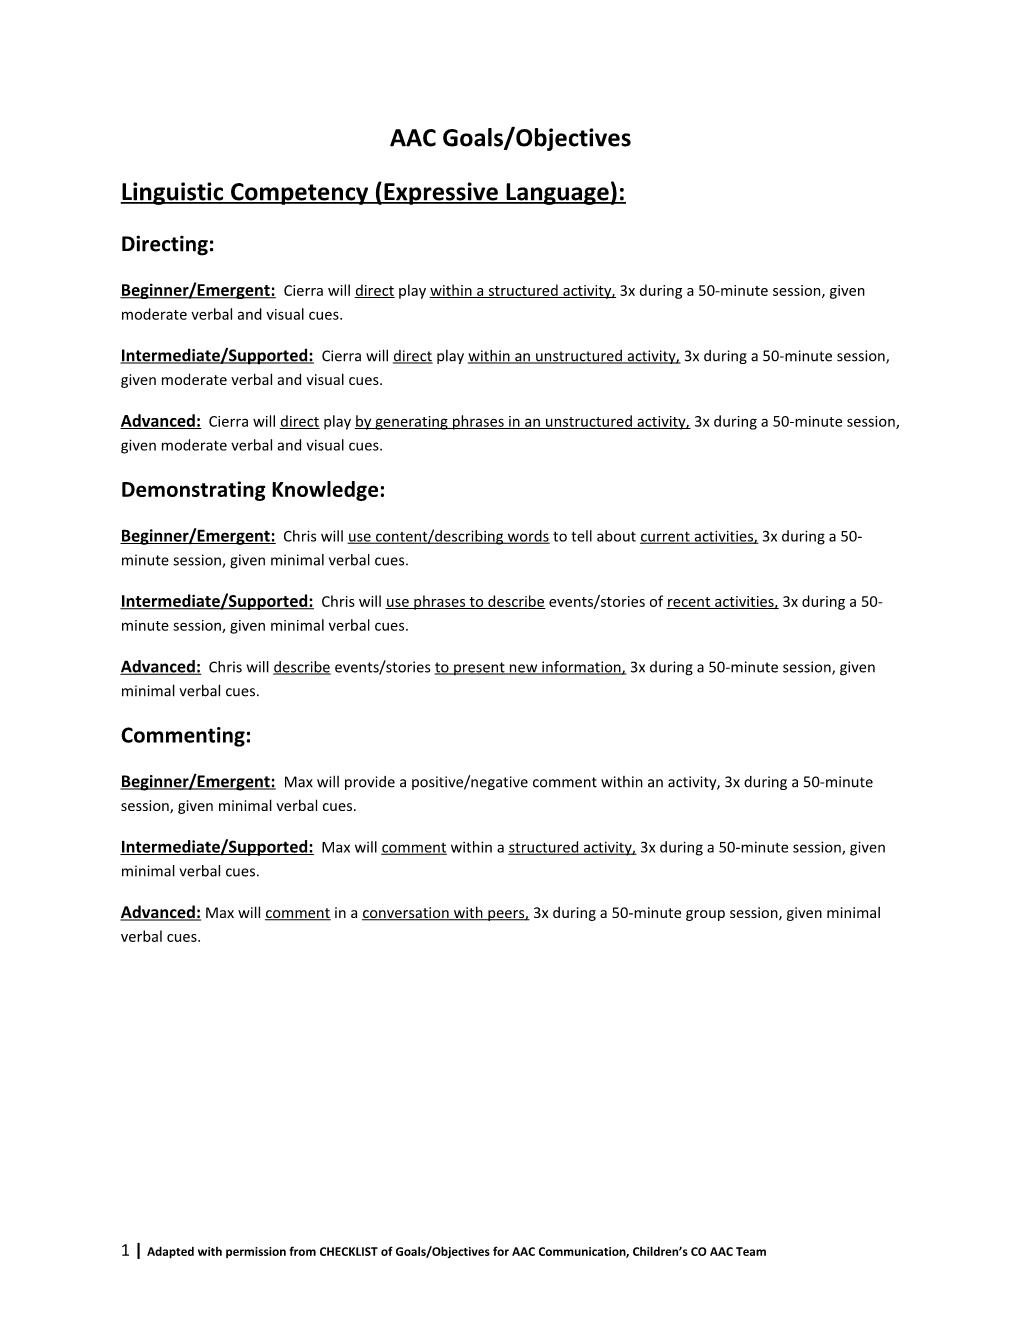 Linguistic Competency (Expressive Language)